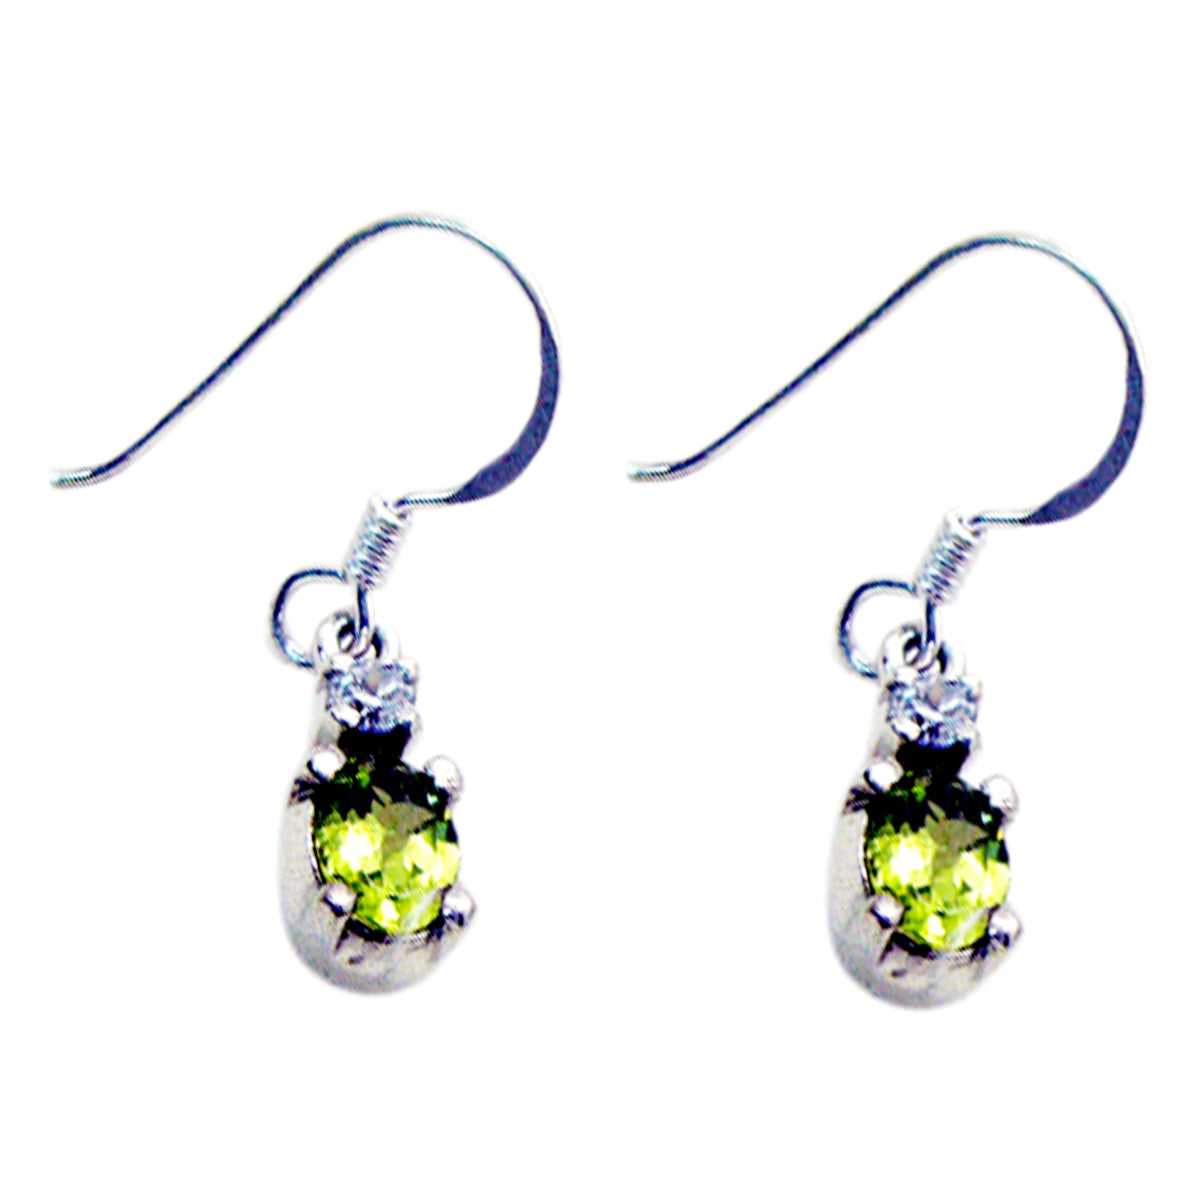 Riyo Nice Gemstone pear Faceted Green Peridot Silver Earrings gift fordaughter day